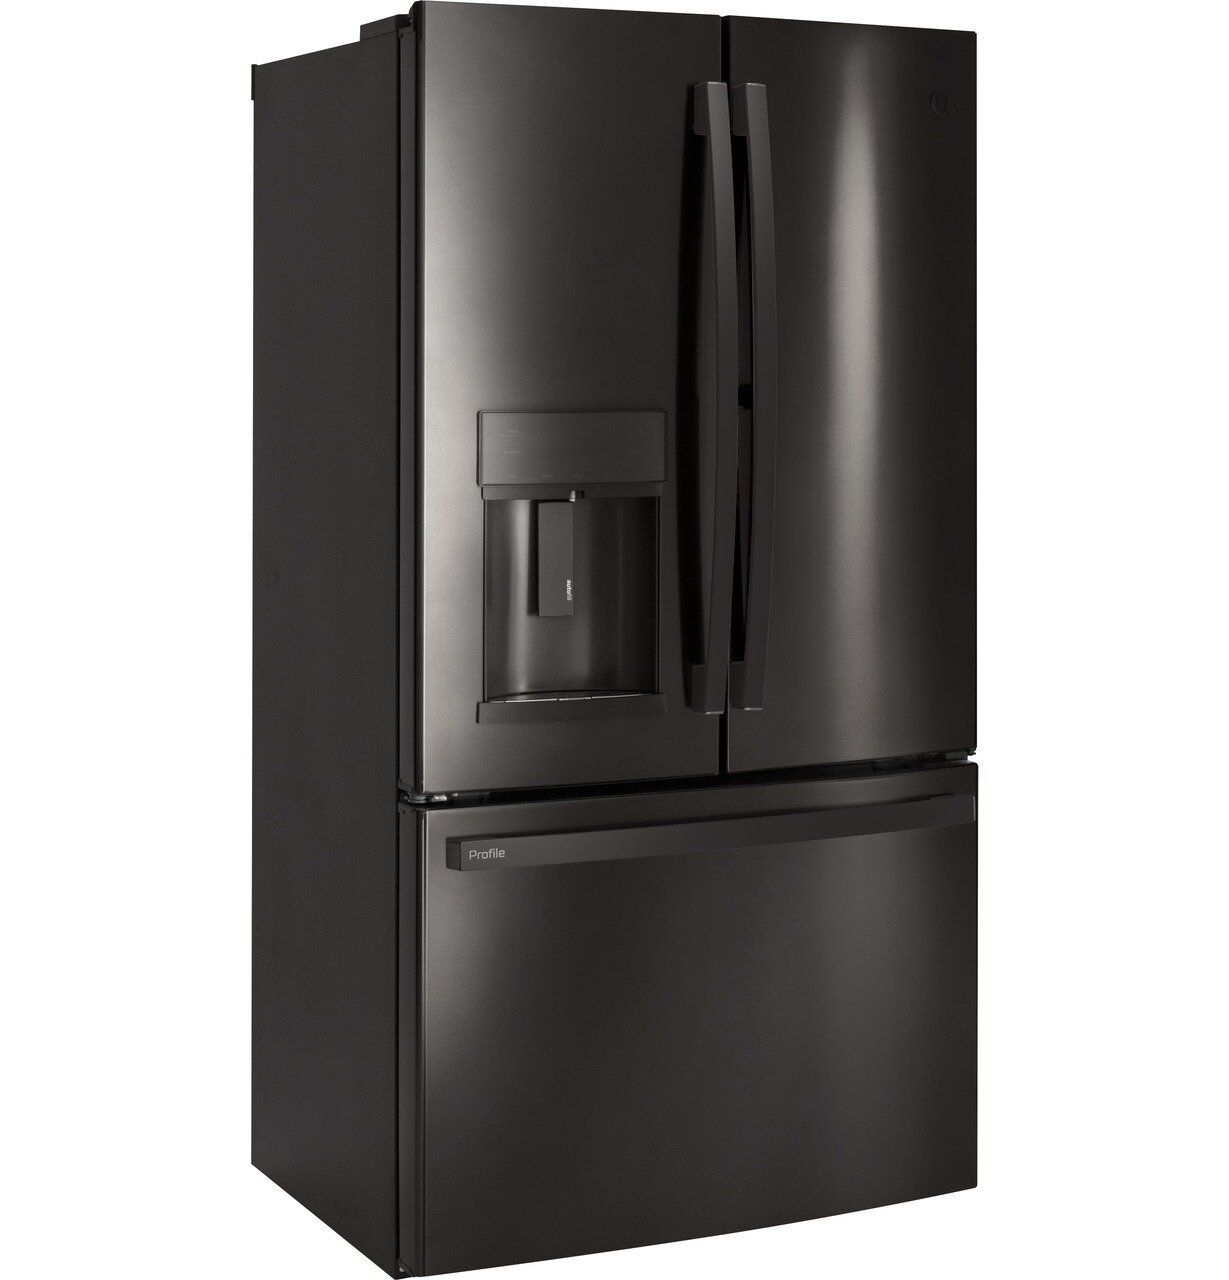 Buy GE Profile 21.6 Cu. Ft. Capacity Side by Side Refrigerator